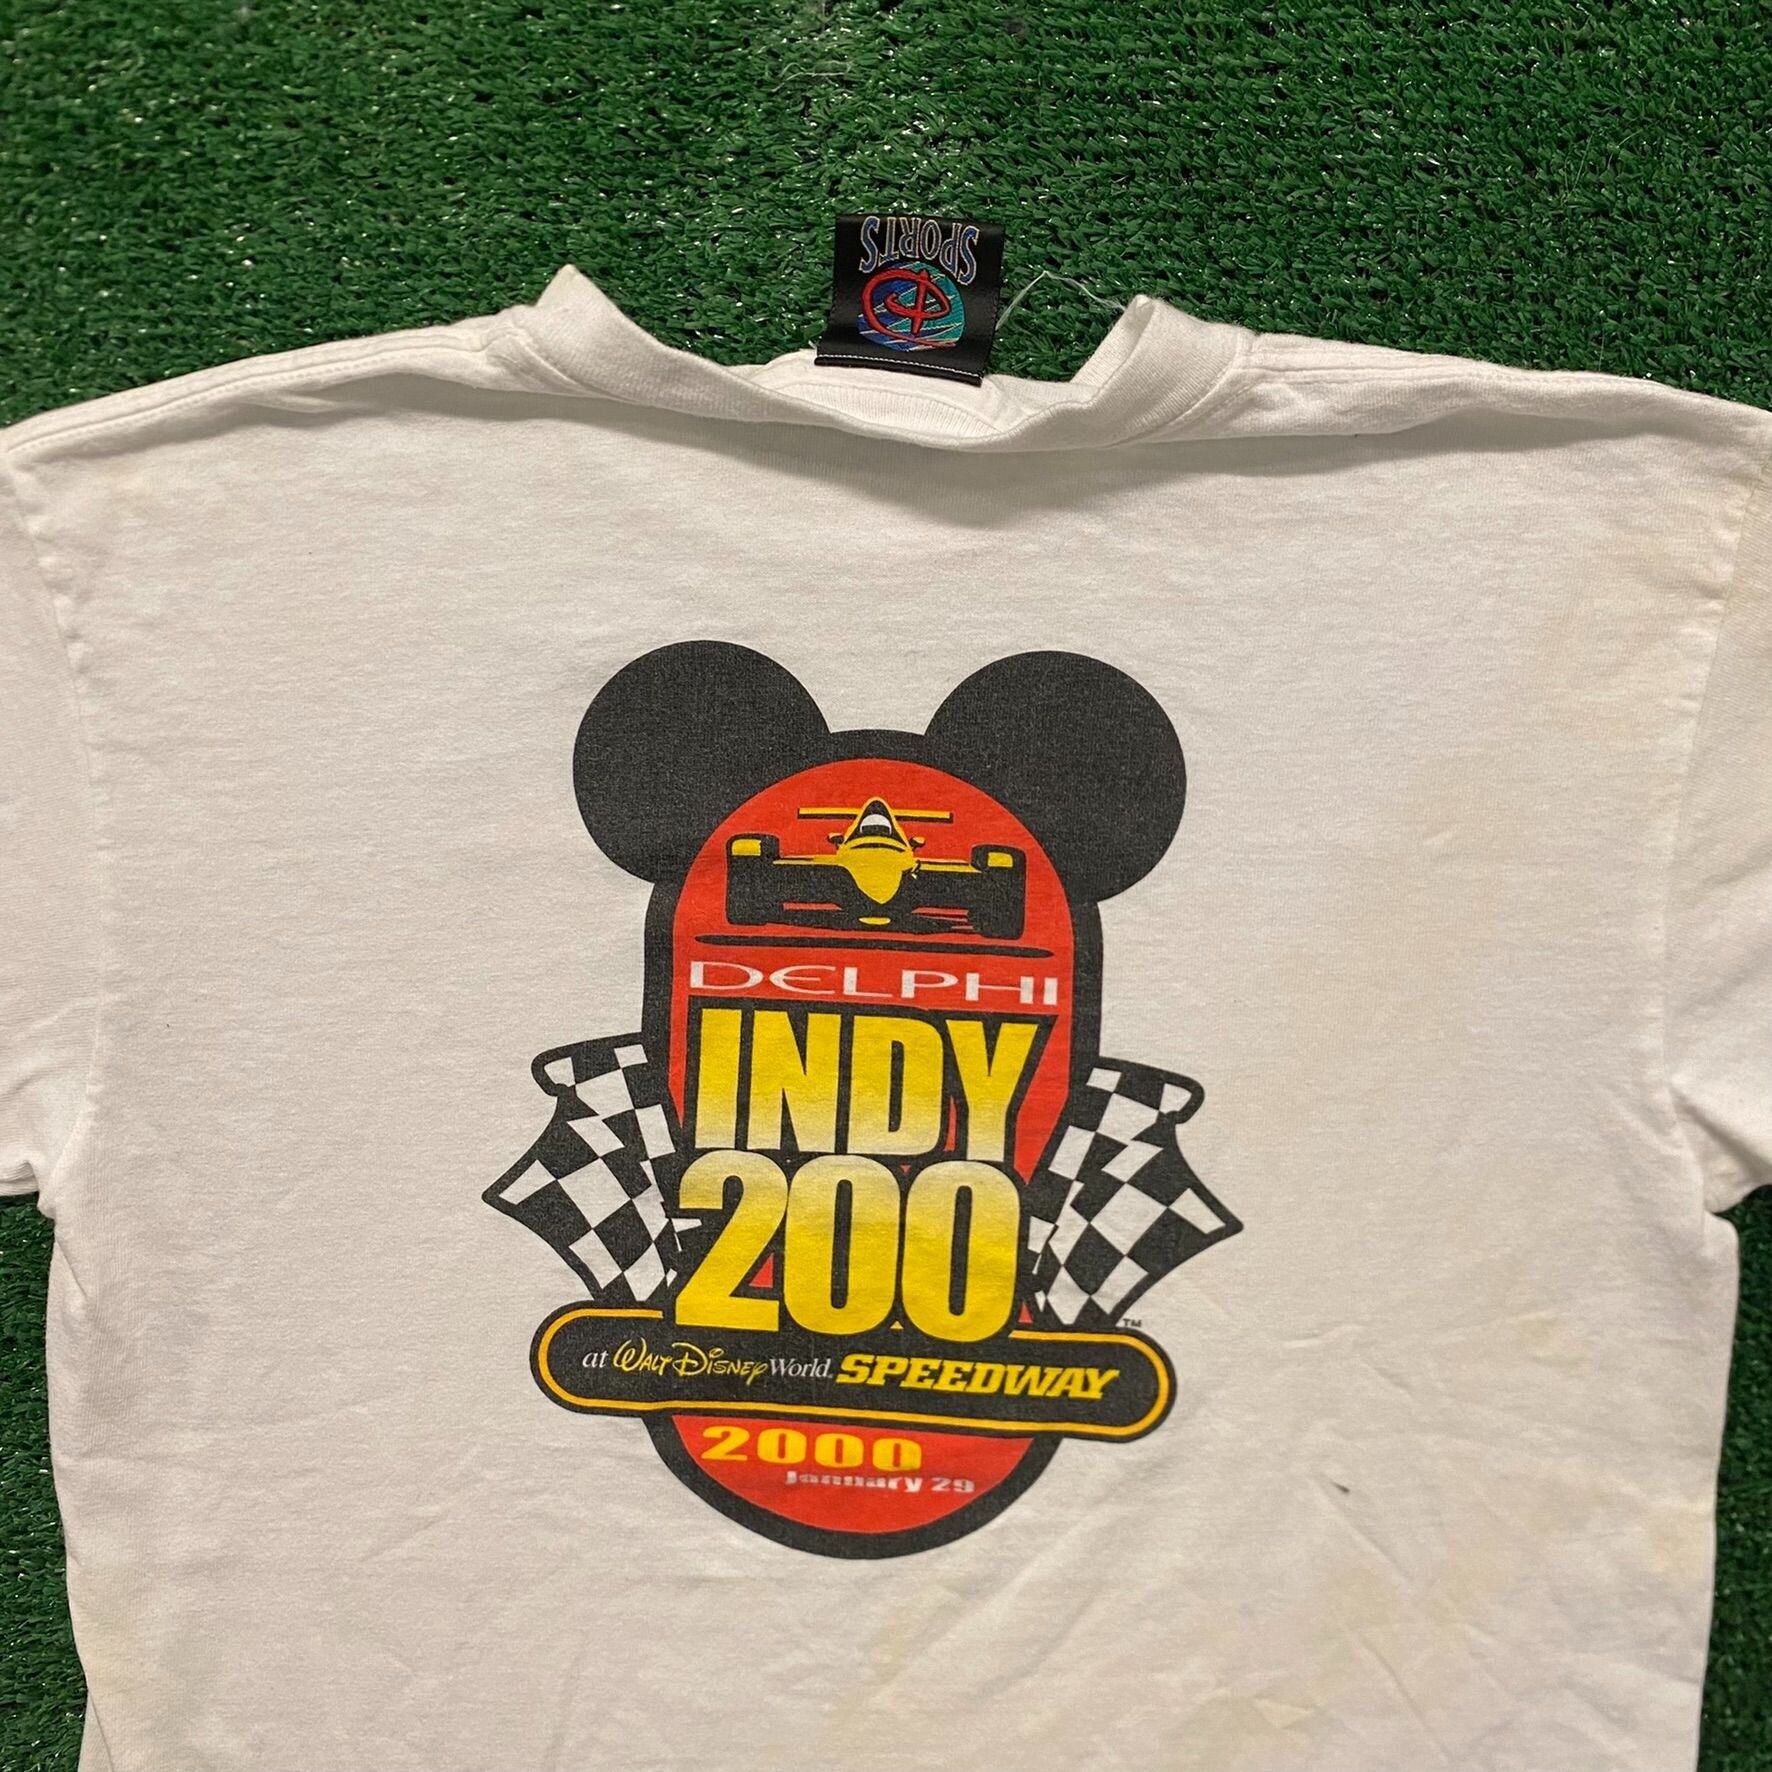 Vintage Disney Indy 200 Vintage Racing T-Shirt Size US S / EU 44-46 / 1 - 5 Preview